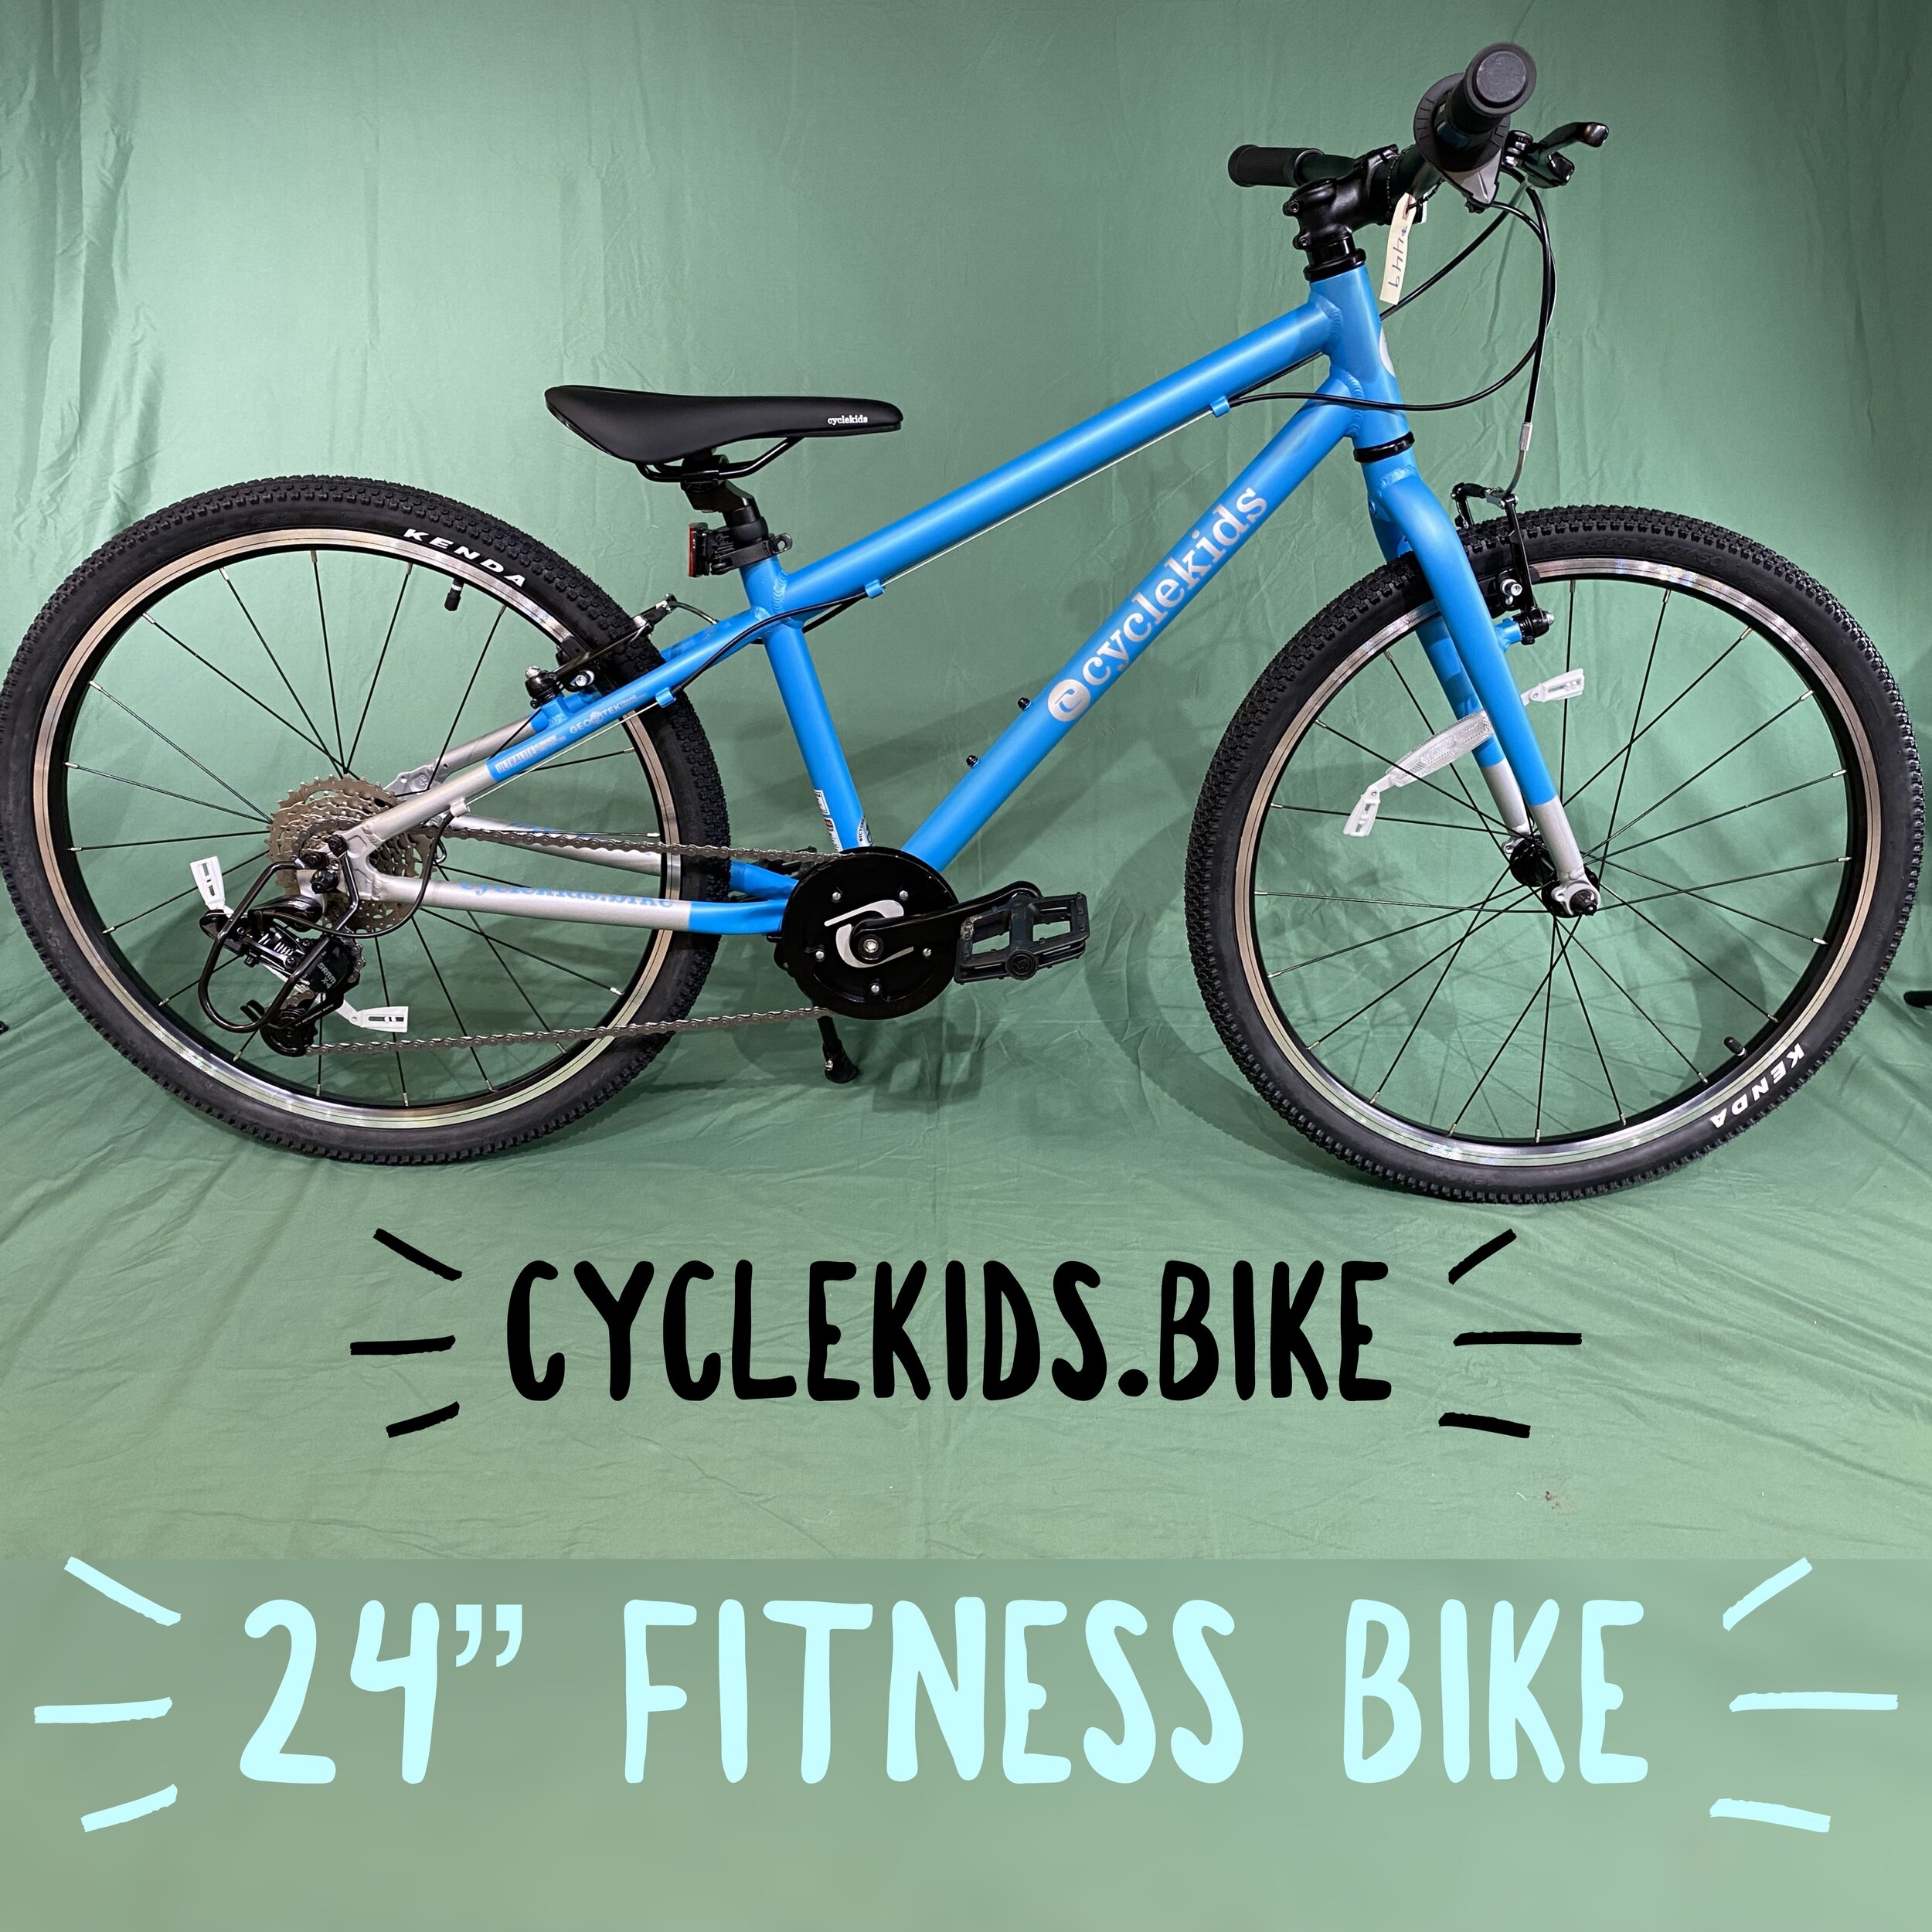 Cycle Kids 24" Fitness Bike -- Amazing Quality